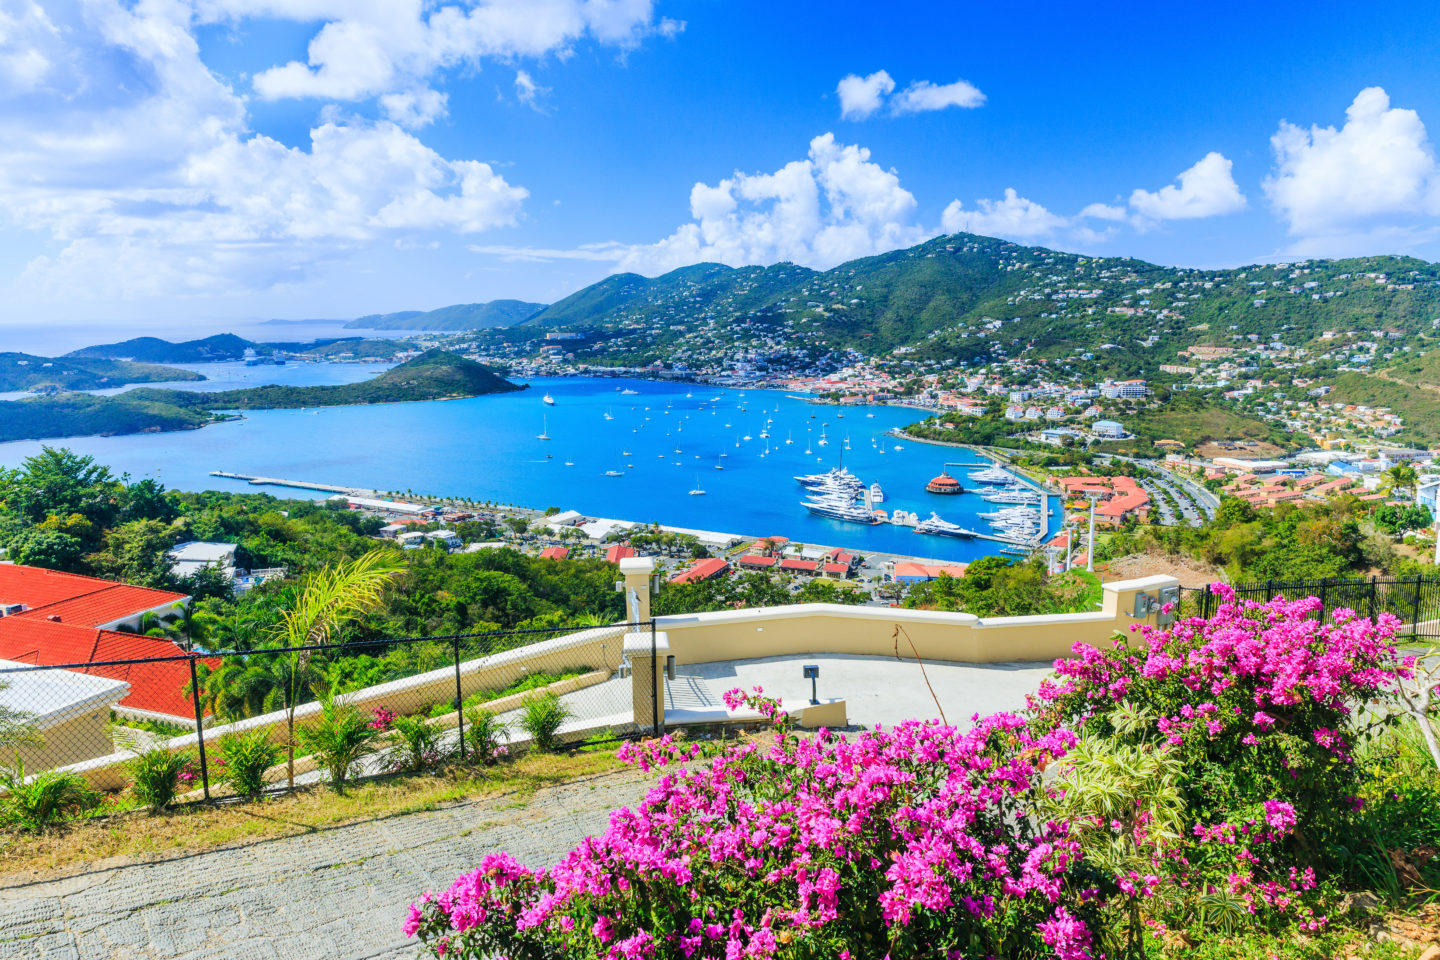 Draft Rules Published for U.S. Virgin Islands Medical Cannabis Program | High Times